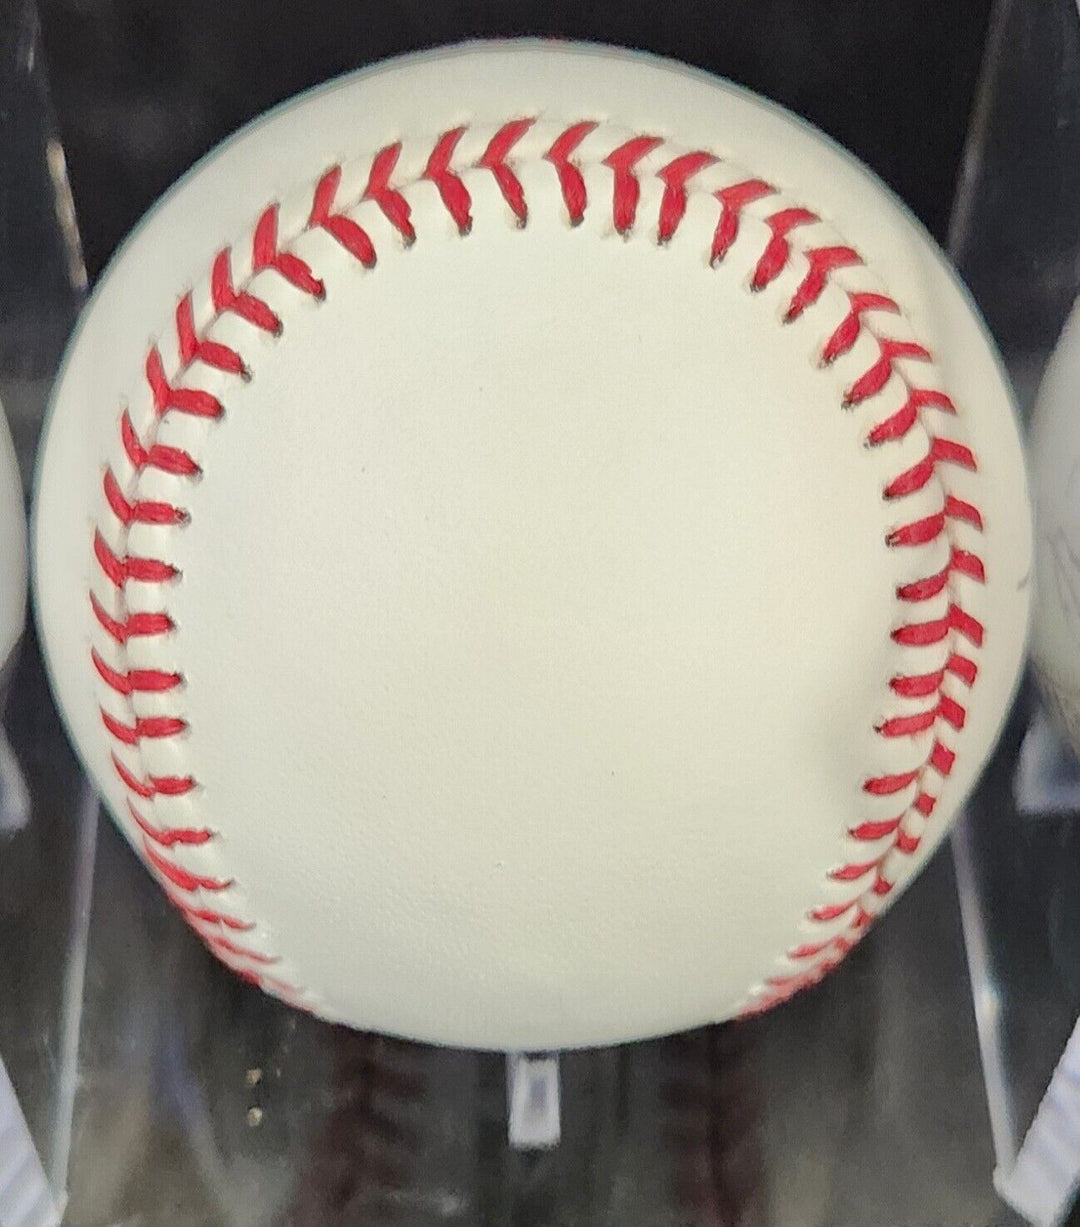 Will Middlebrooks Signed 2013 World Series Baseball Boston Red Sox JSA COA